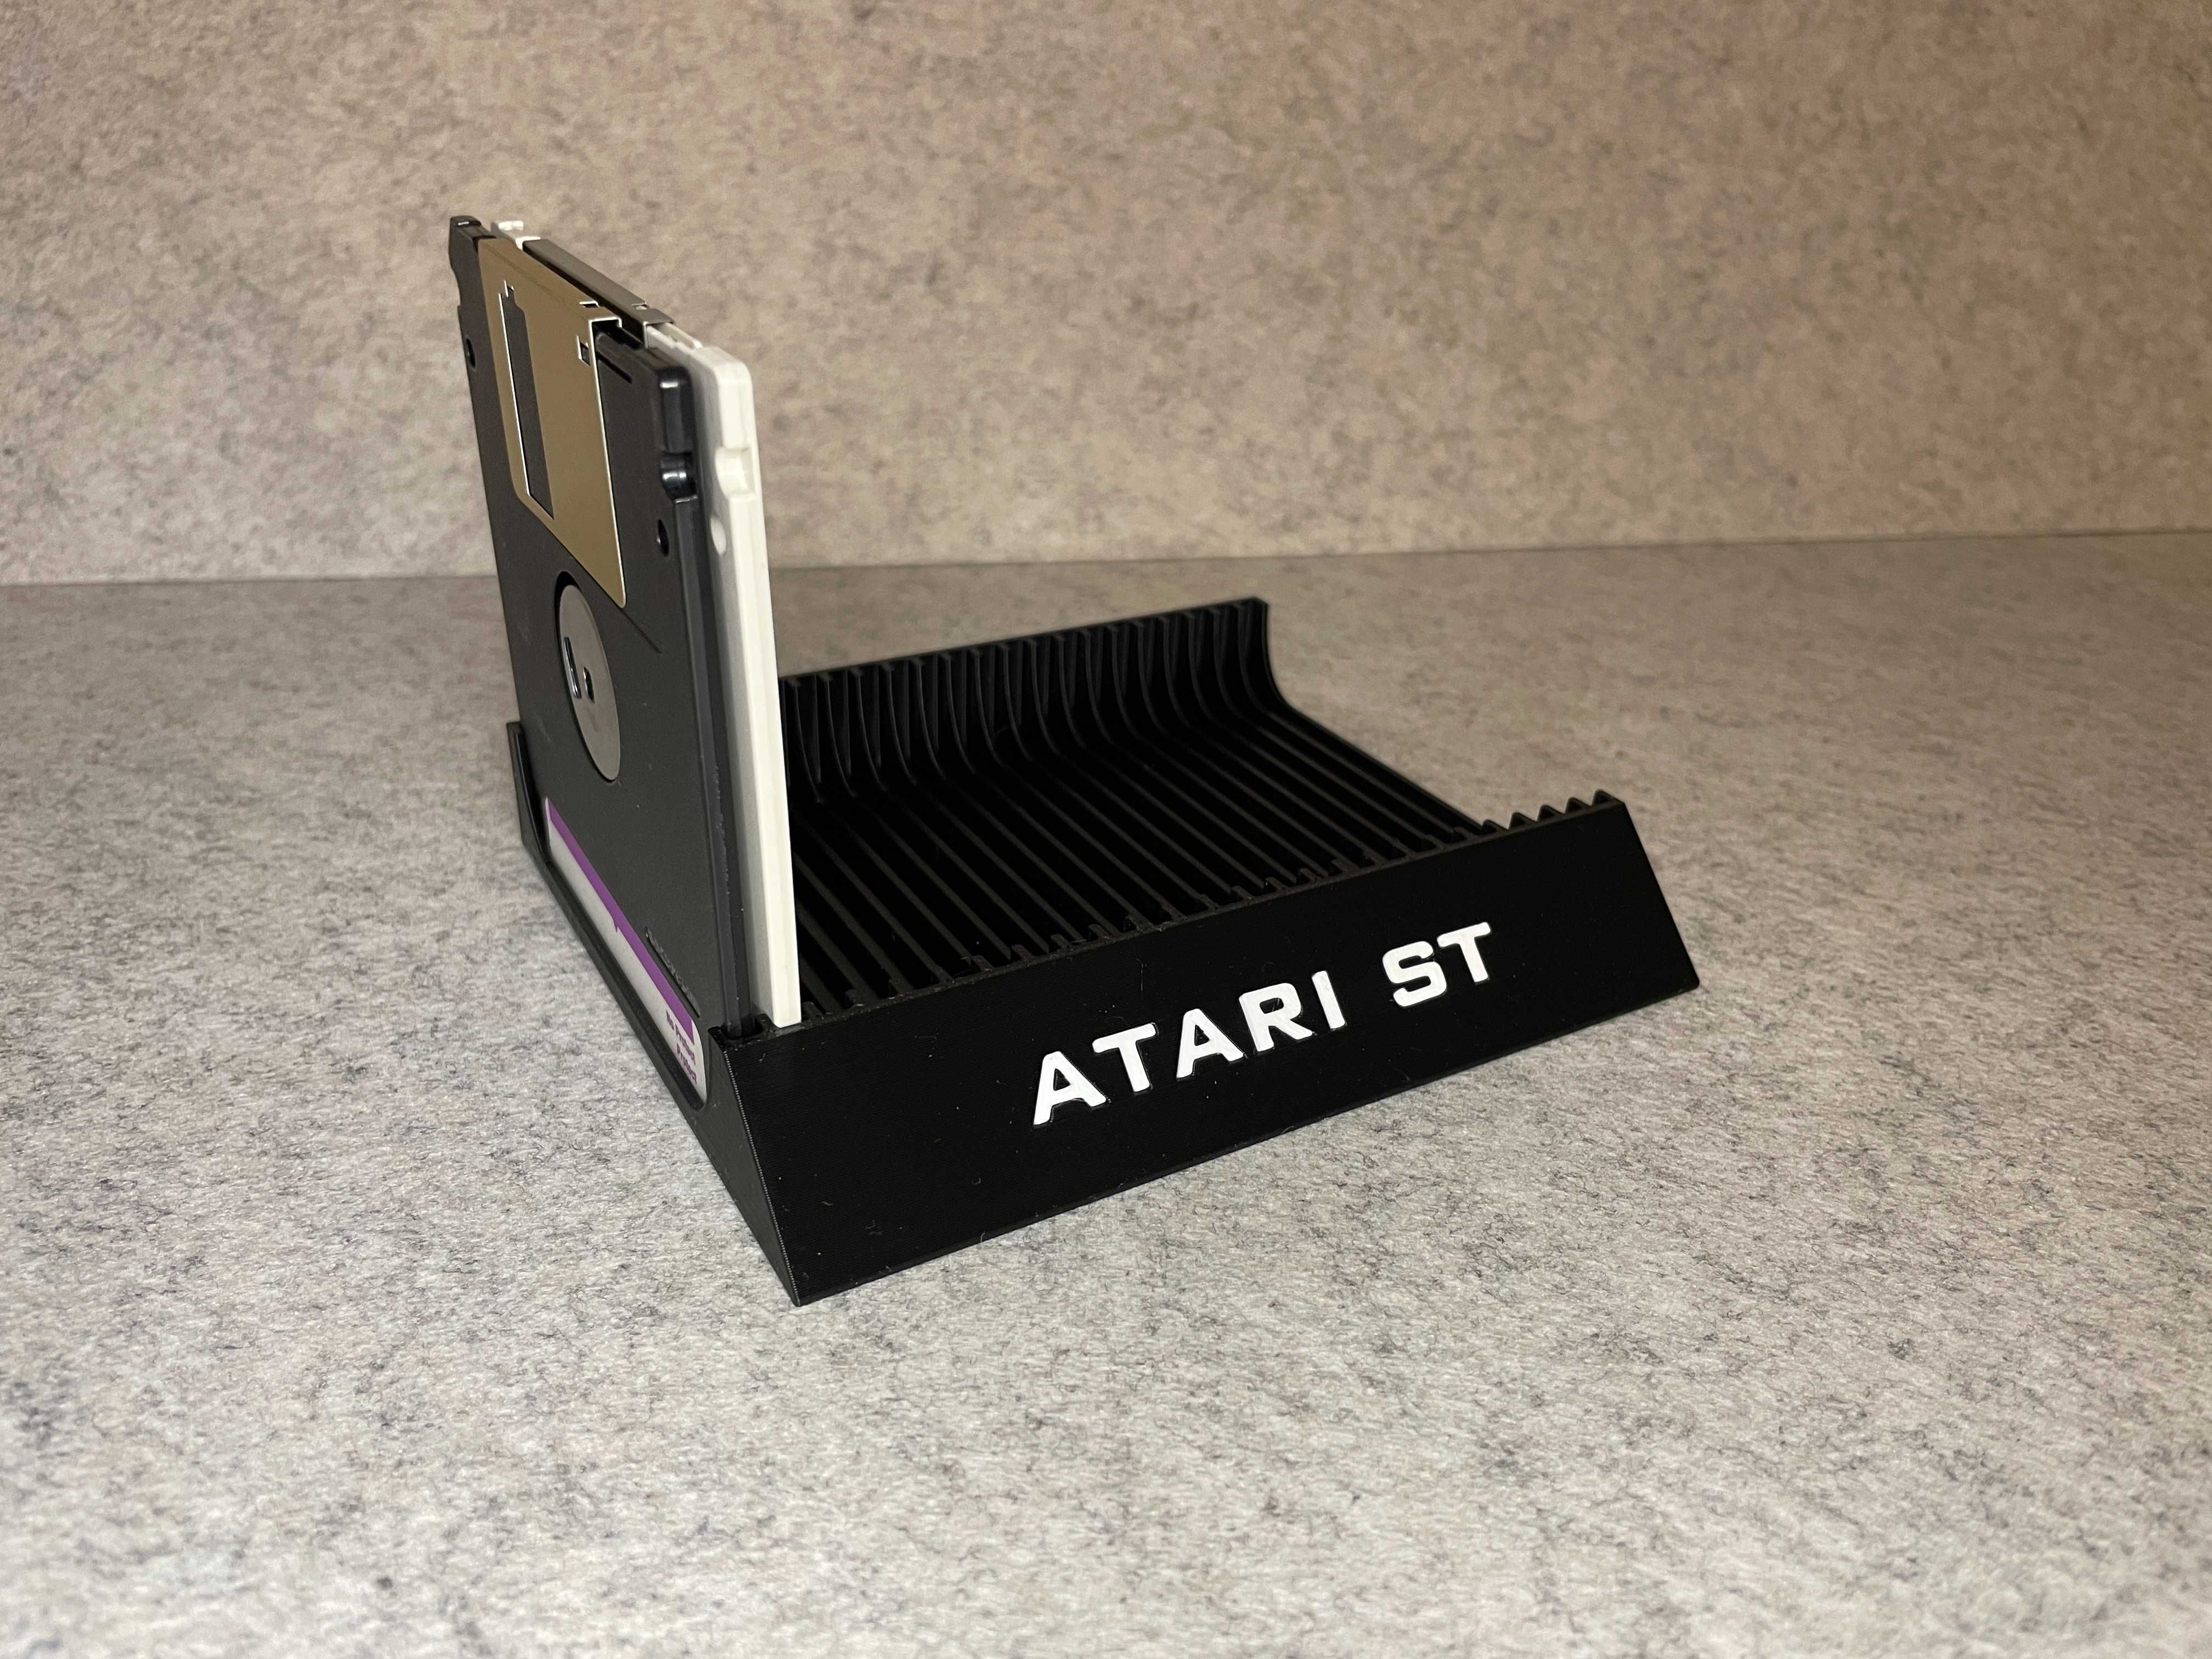 Stojak podstawka na 25 gier dyskietek Atari ST